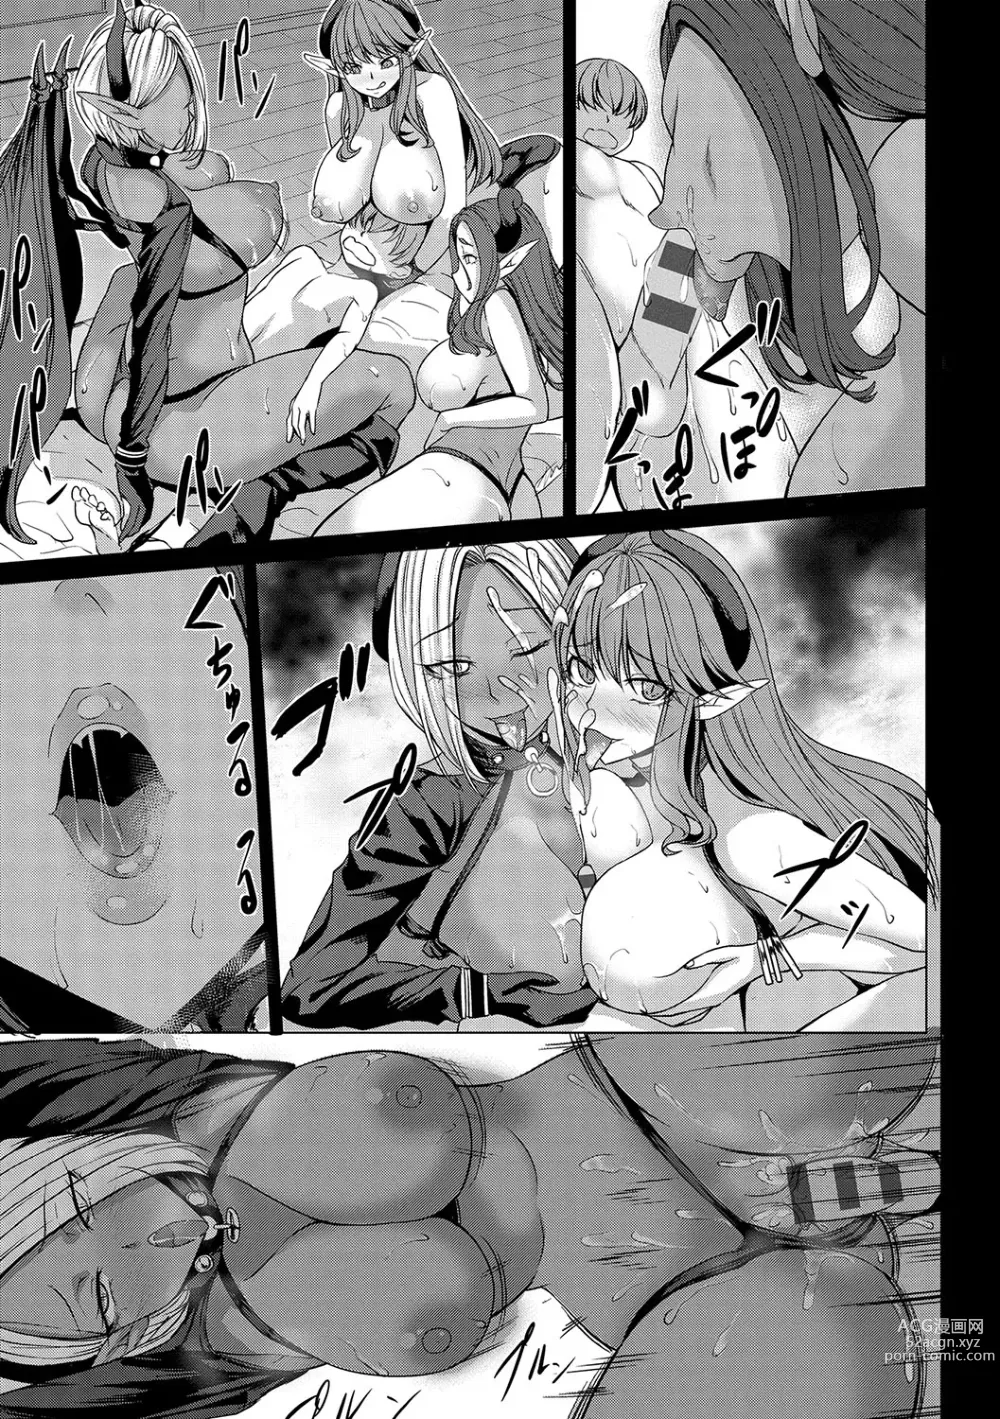 Page 222 of manga A Cup no Kanojo yori J Cup no Kuro Gal no Hou ga Yoi yo ne? - Youd rather have a tanned gal with J-cup boobs than an A-cup girlfriend, wouldn't you?